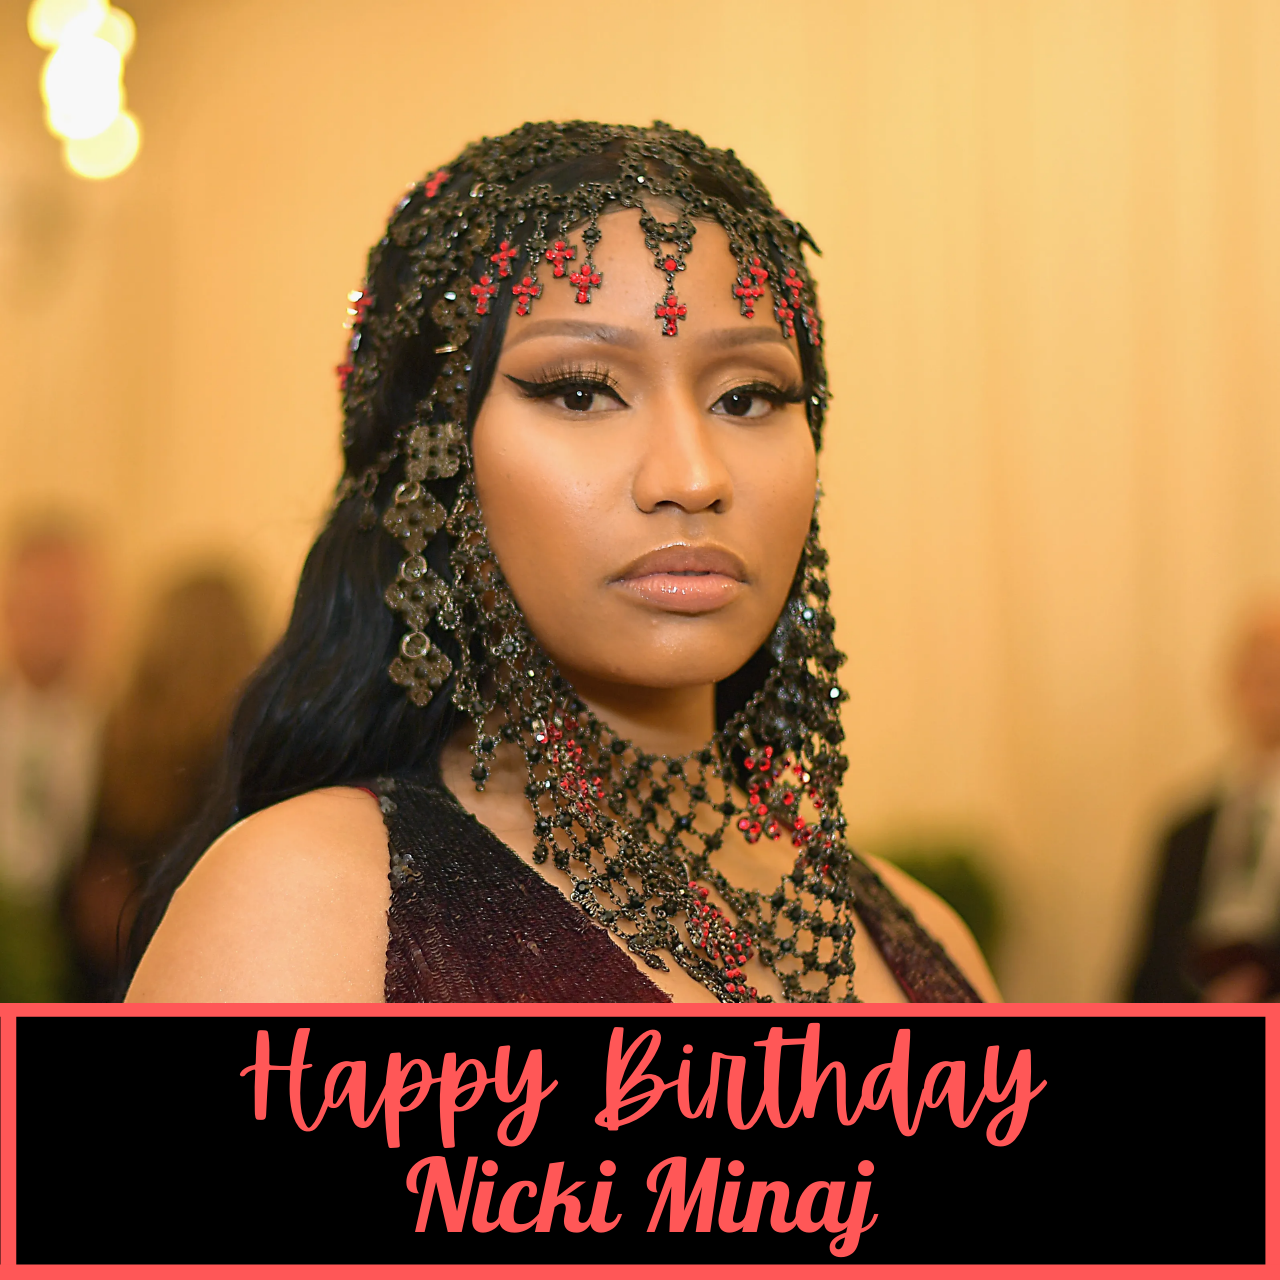 Happy Birthday Nicki Minaj Quotes, Meme, Wishes, HD Images, Instagram Caption to greet her